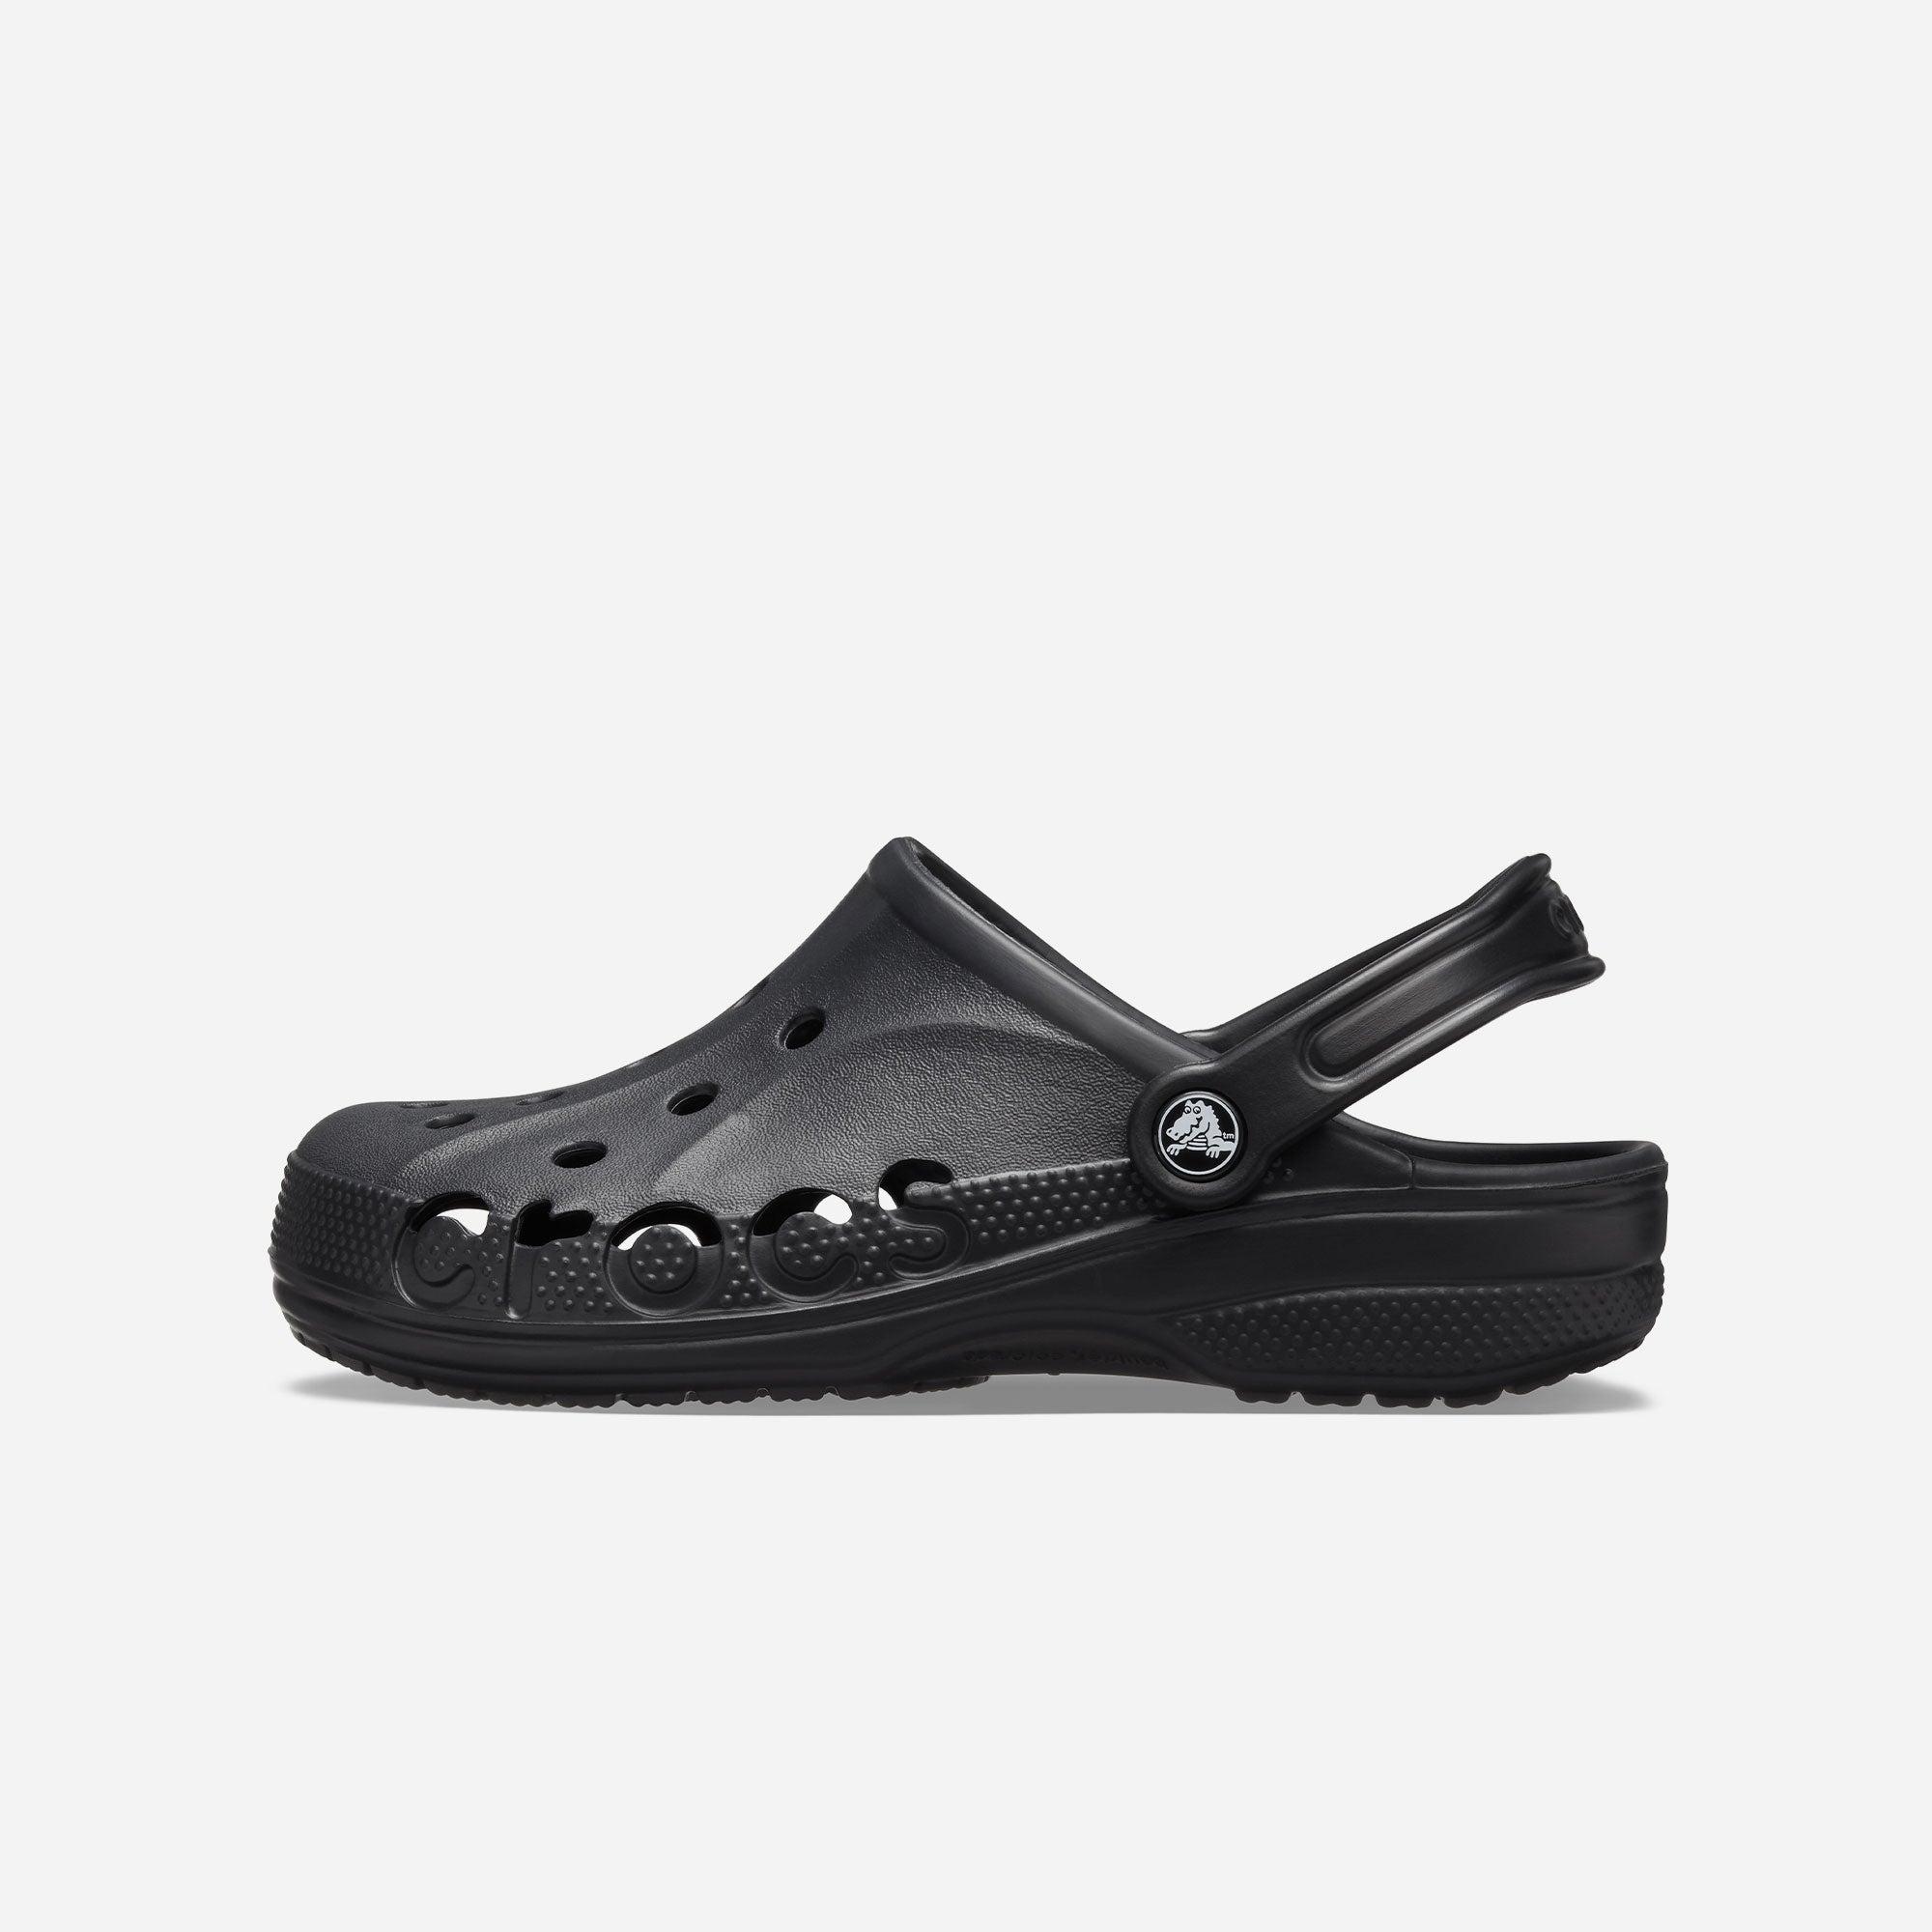 Giày lười unisex Crocs Baya - 10126-001